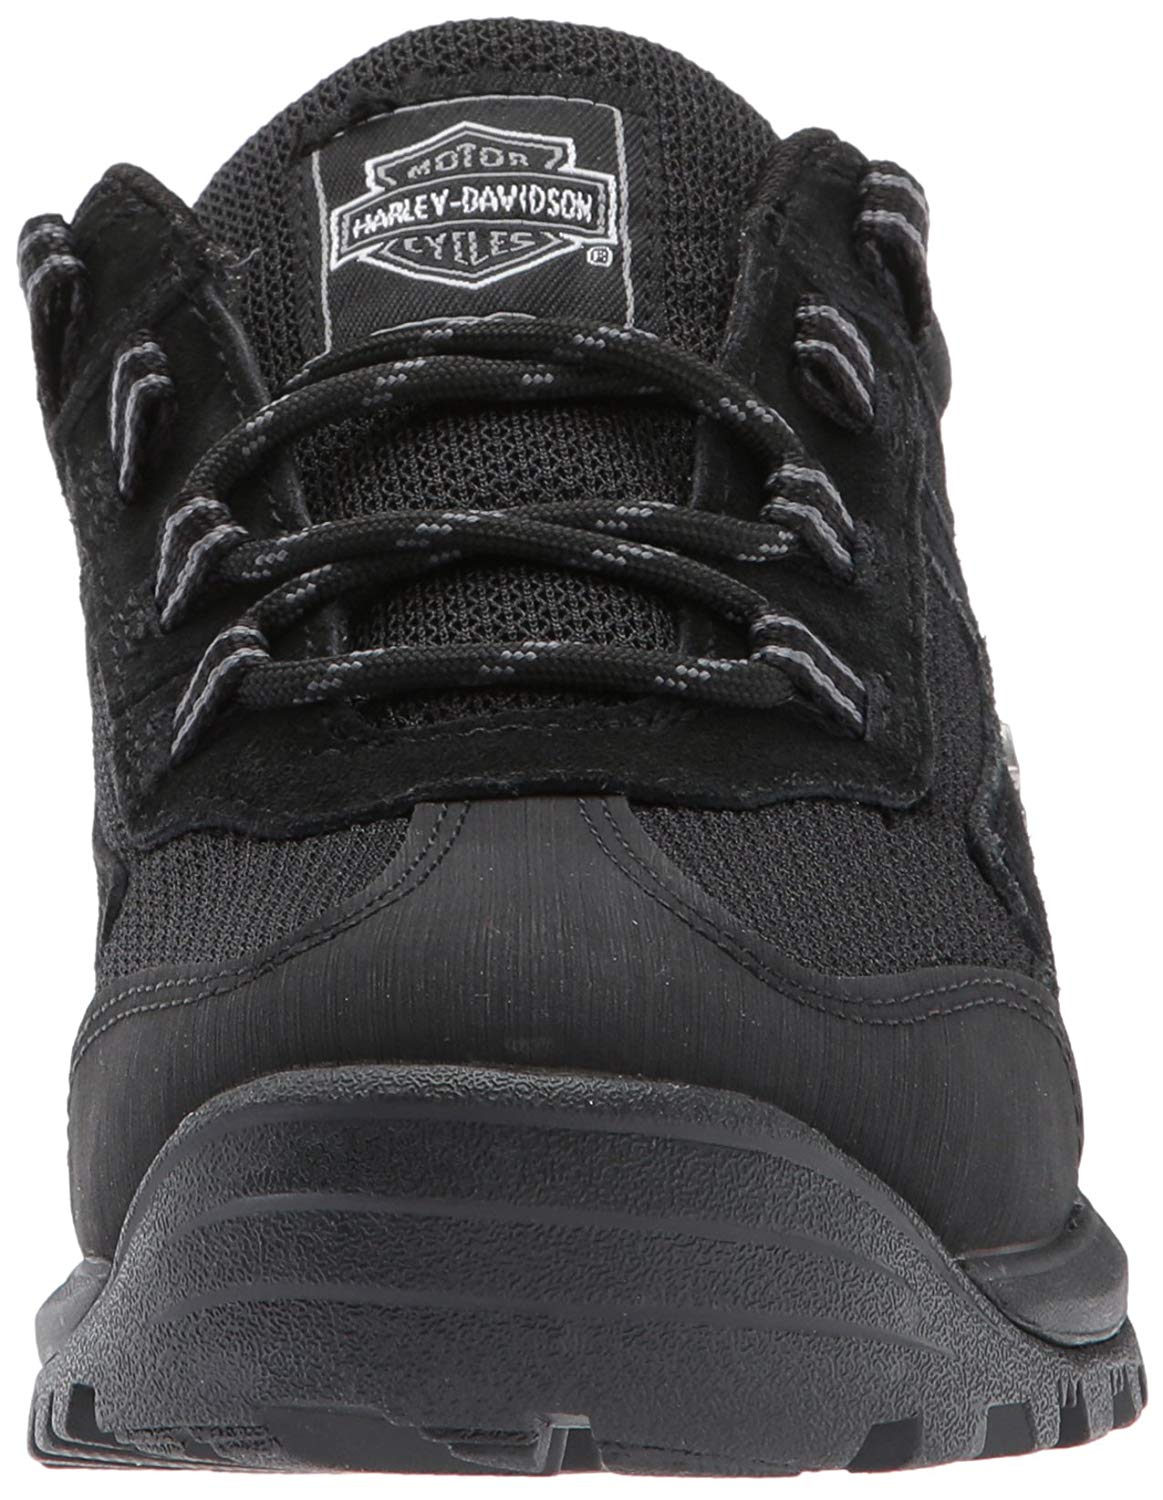 HARLEY-DAVIDSON] Women´s Vardon Sneaker， Black， 06.5 M US 【現金特価】 